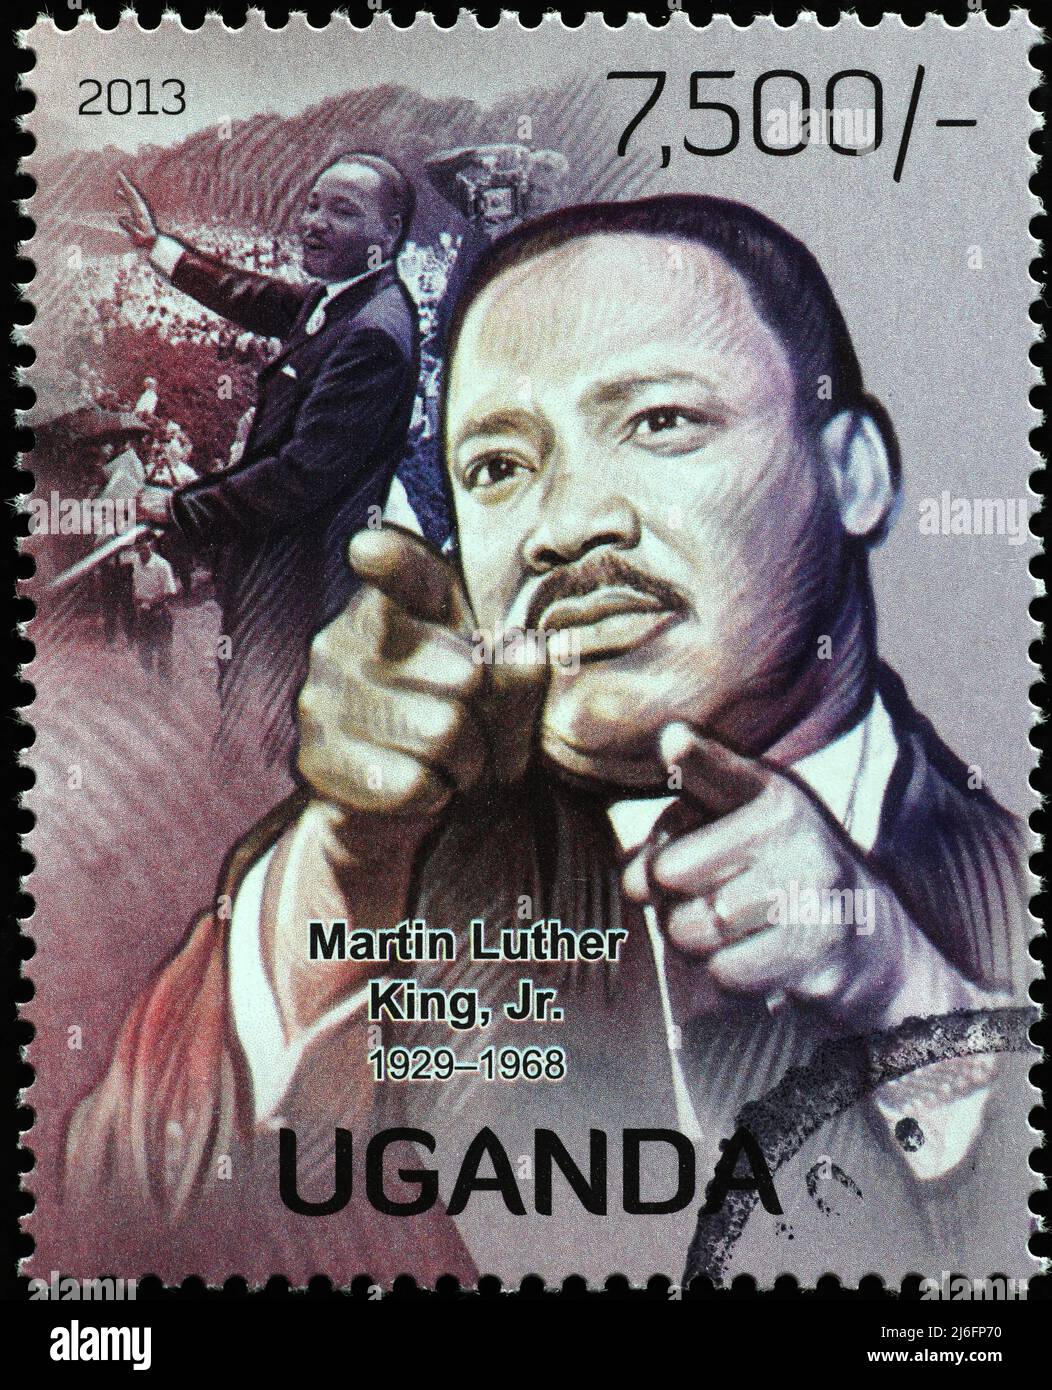 Martin Luther King Jr. portrait on postage stamp of Uganda Stock Photo